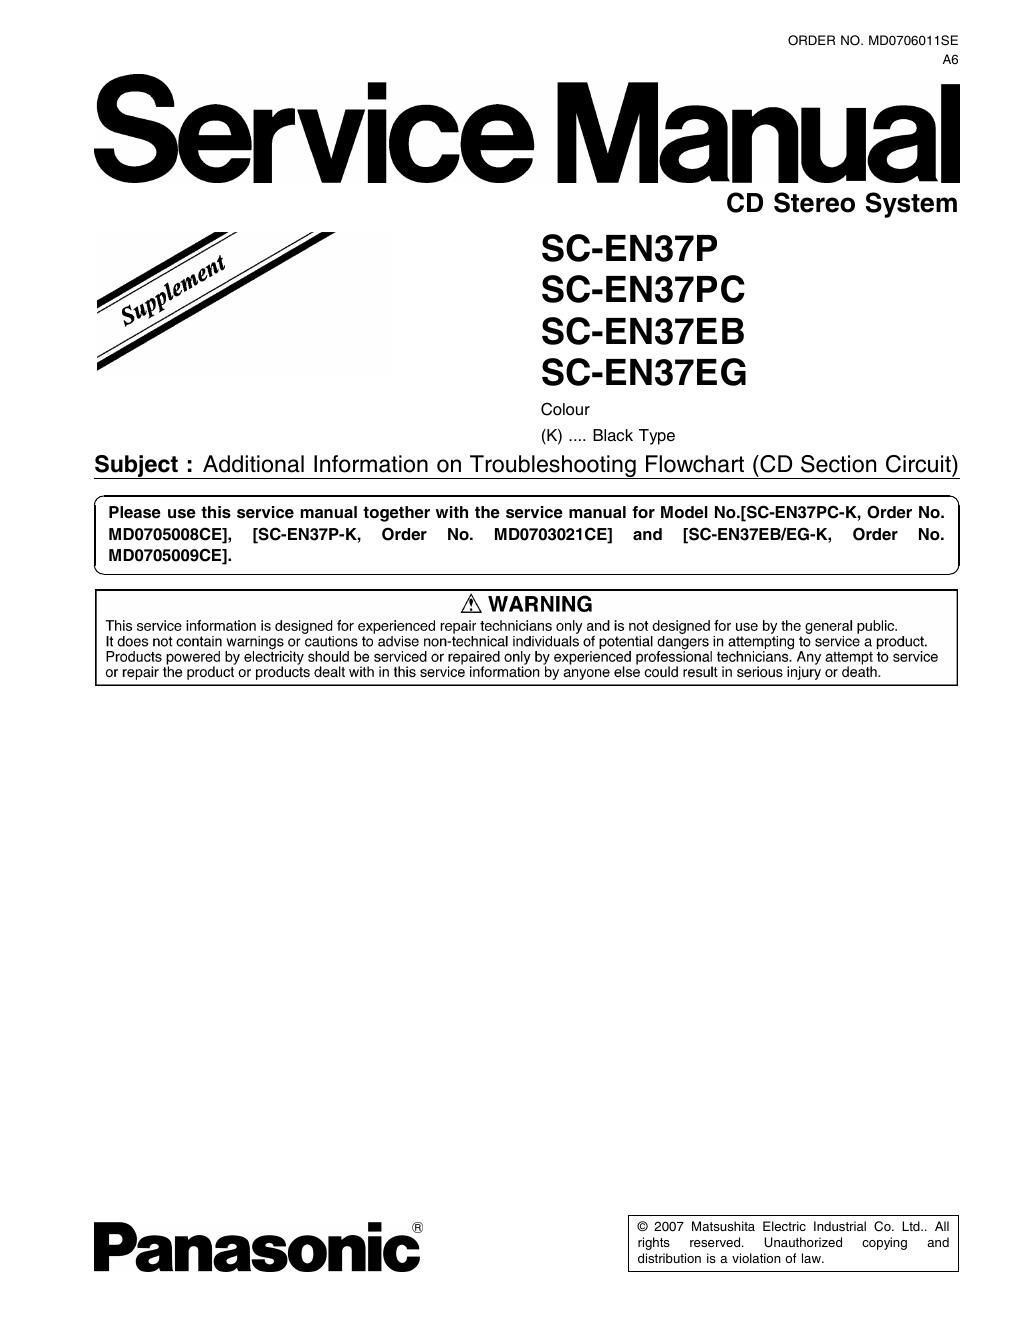 panasonic sc en 37 eb service manual